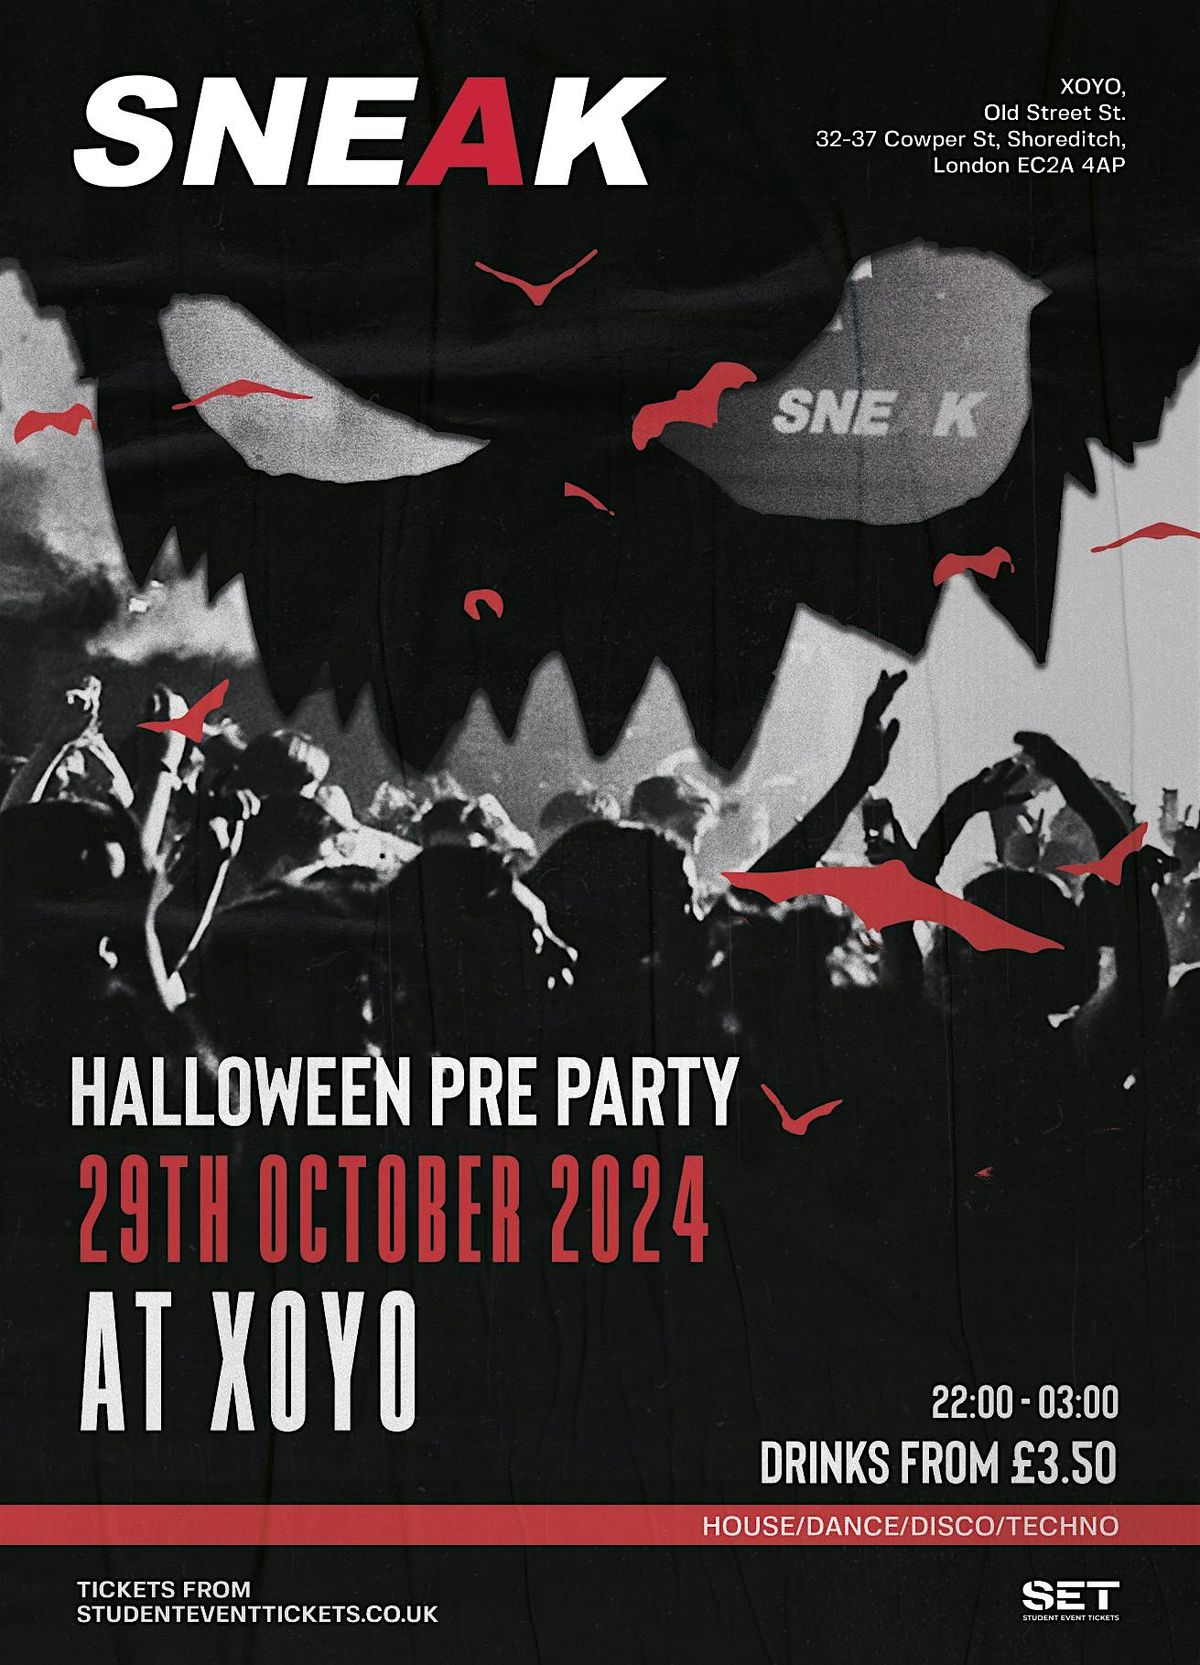 SNEAK HALLOWEEN @ XOYO - TUESDAY 29TH OCTOBER